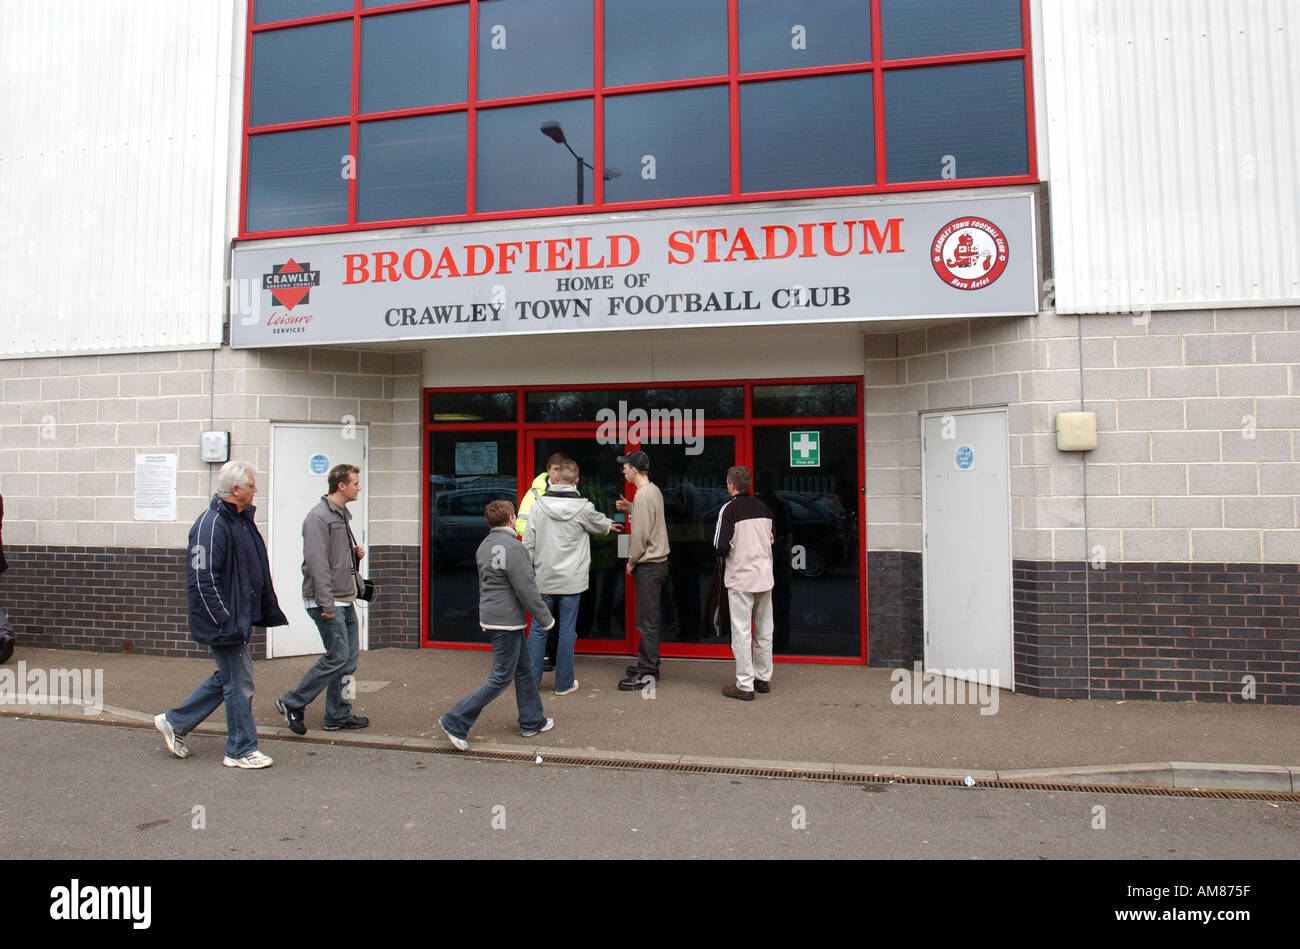 Broadfield Stadium Crawley Town Football Club, Sussex, UK Stock Photo